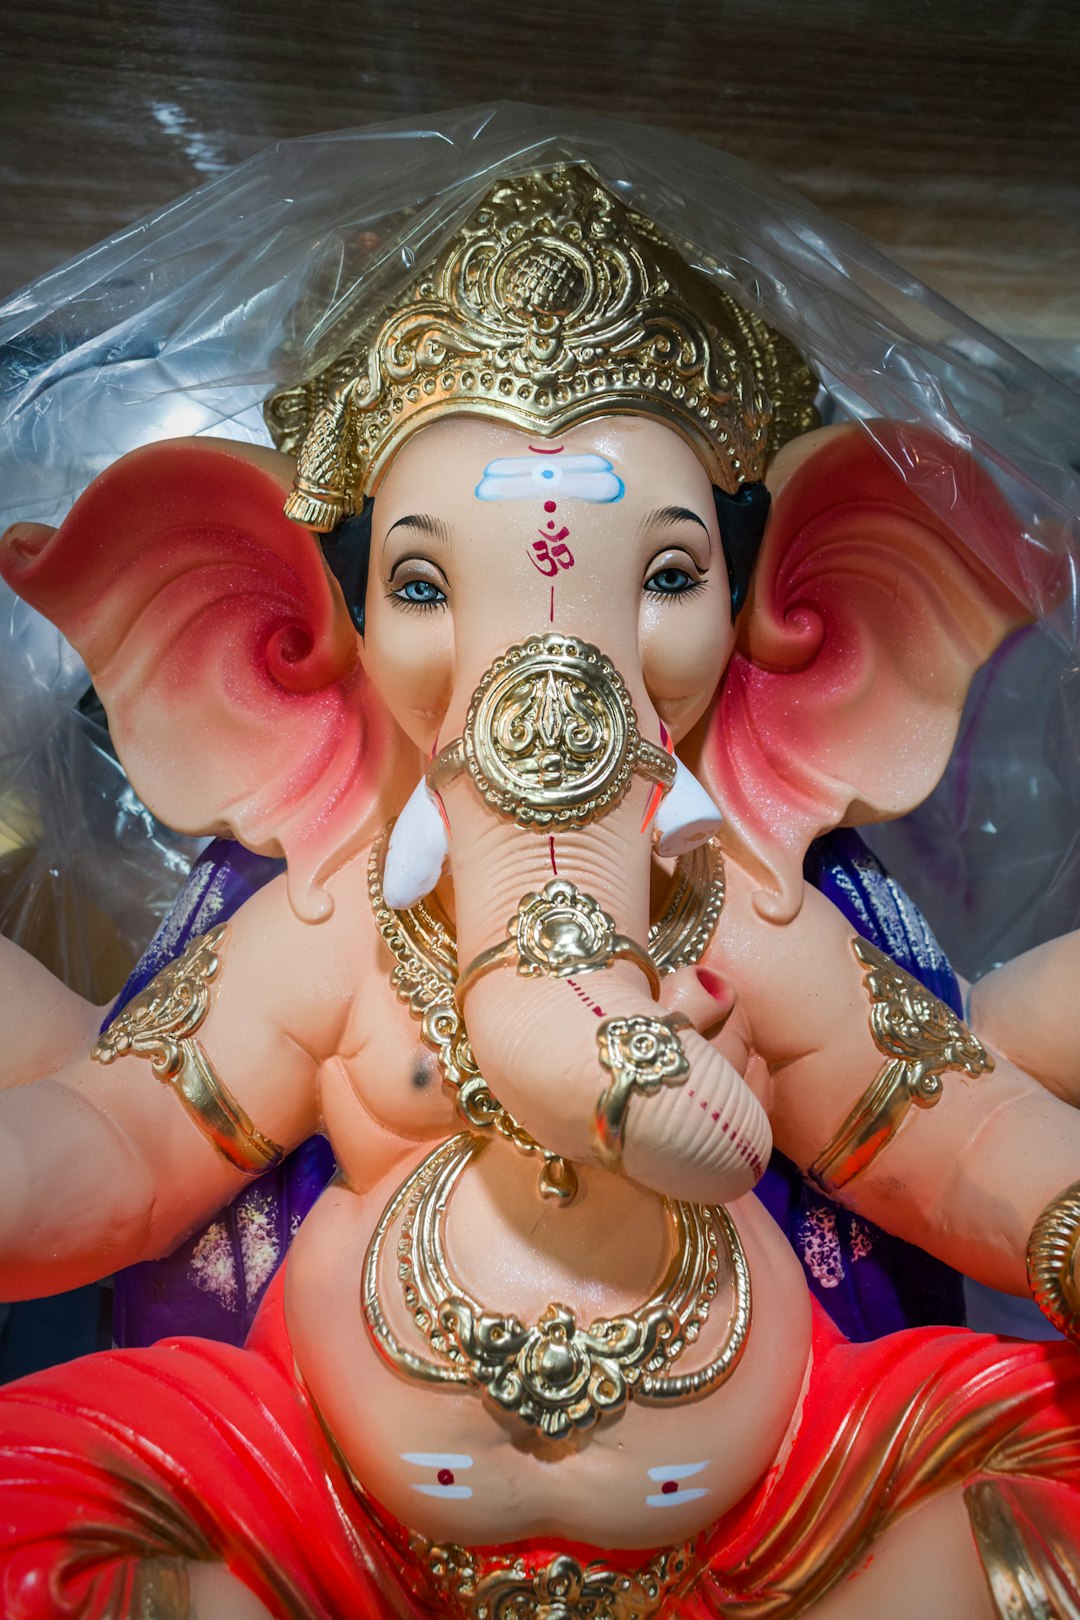 gold and red hindu deity figurine